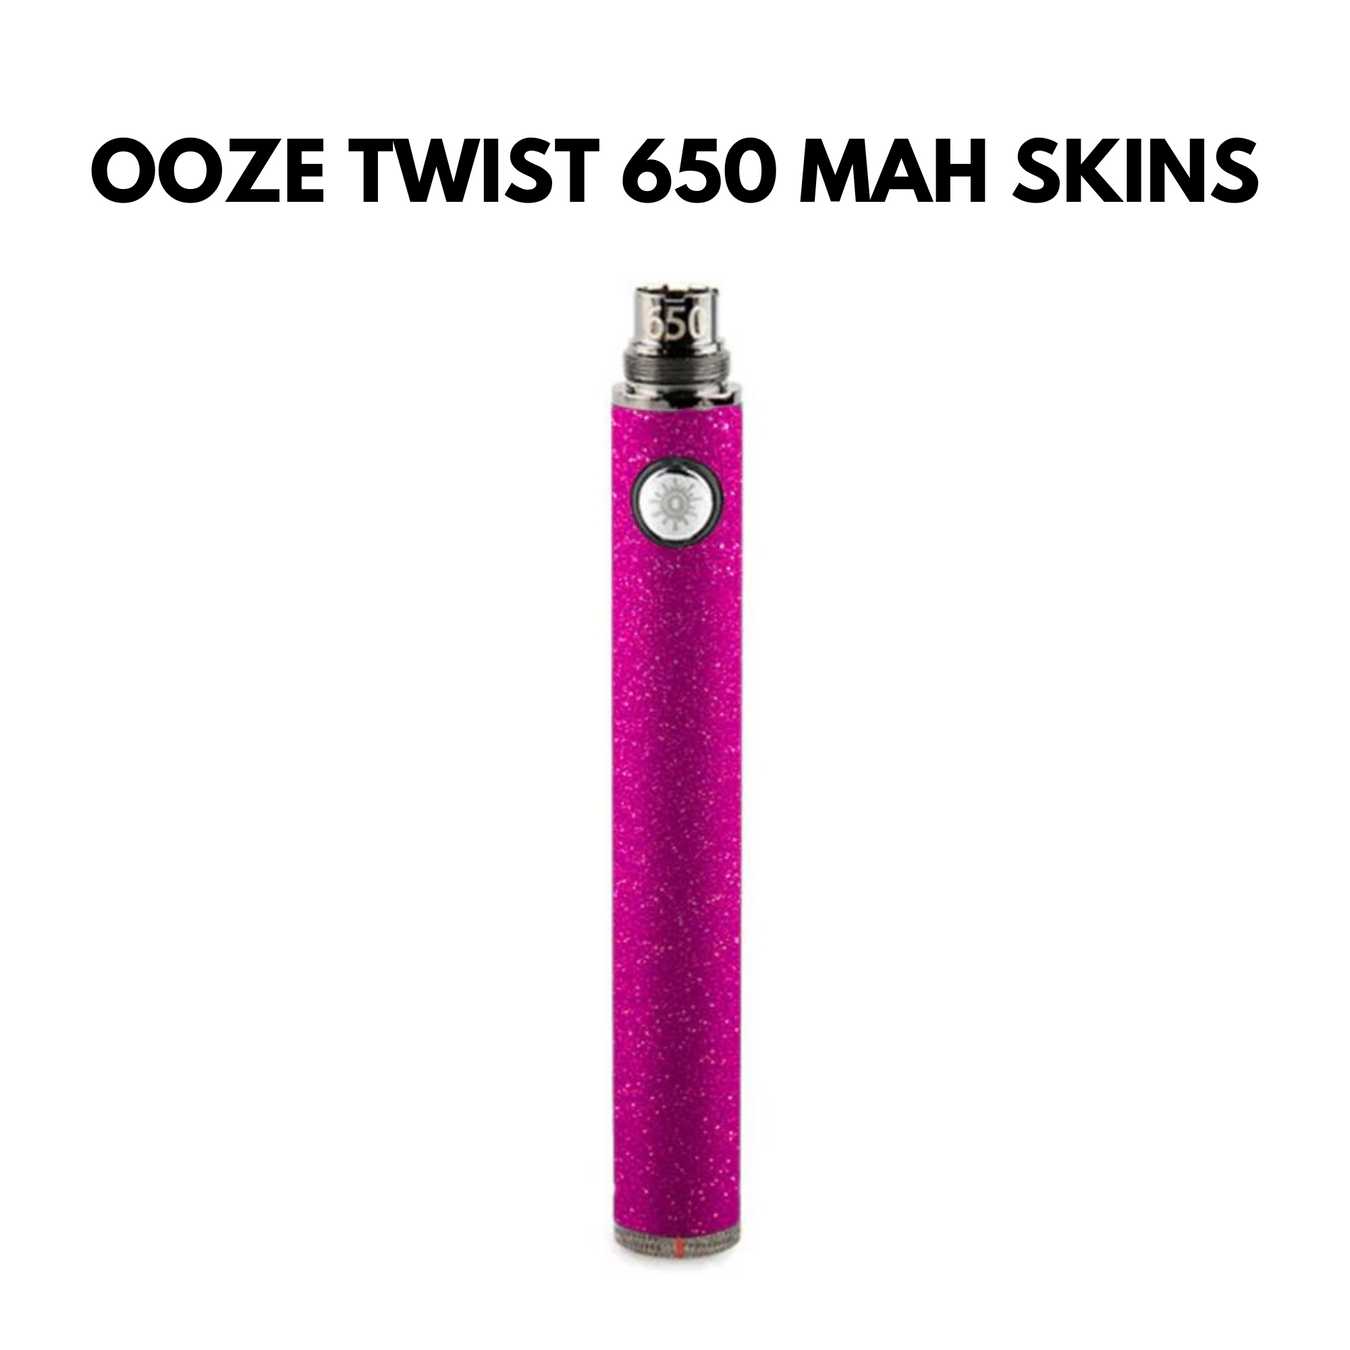 Ooze Twist 650 mAh Skins